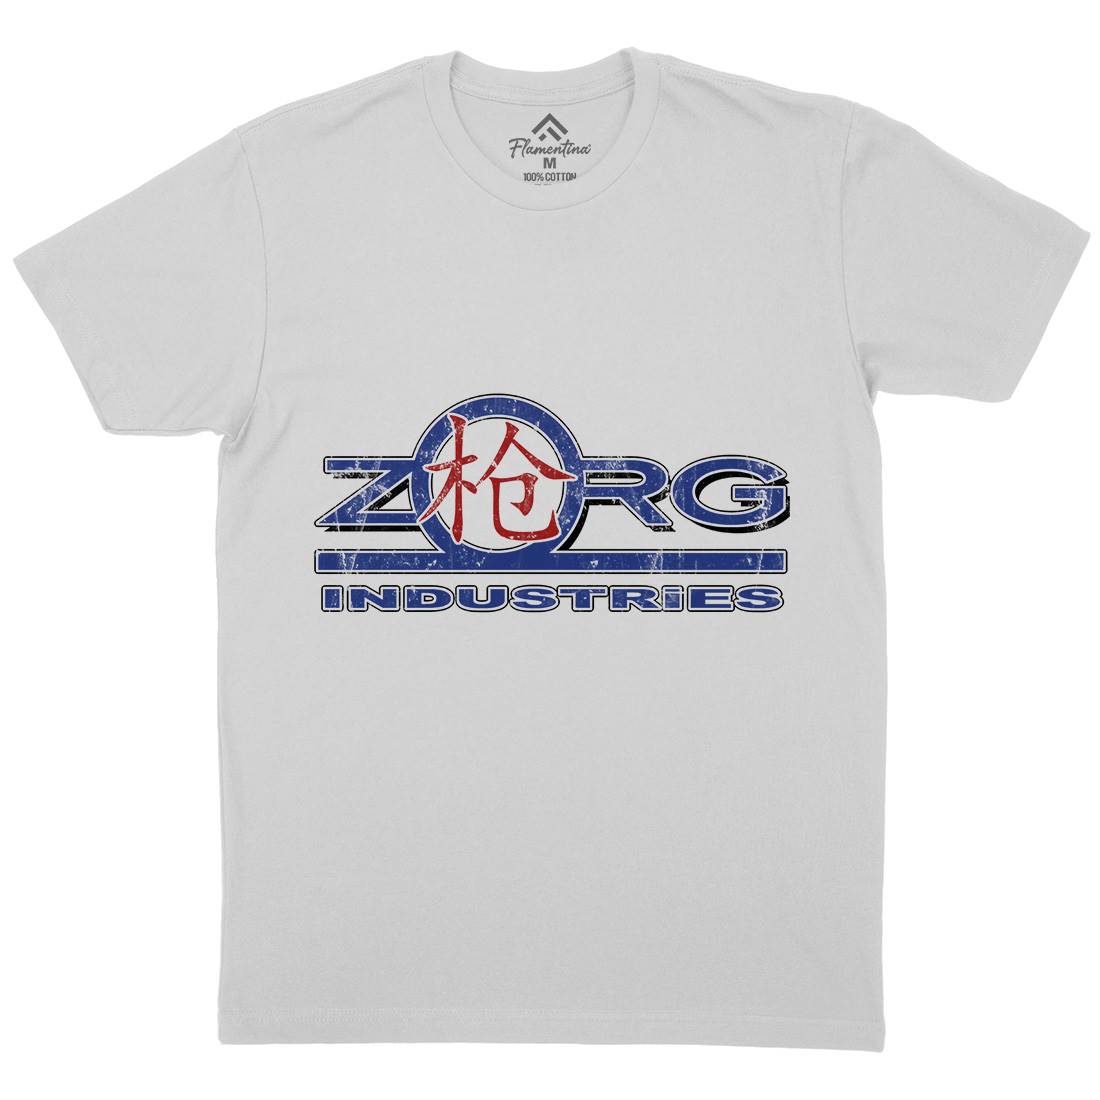 Zorg Ind Mens Crew Neck T-Shirt Space D105